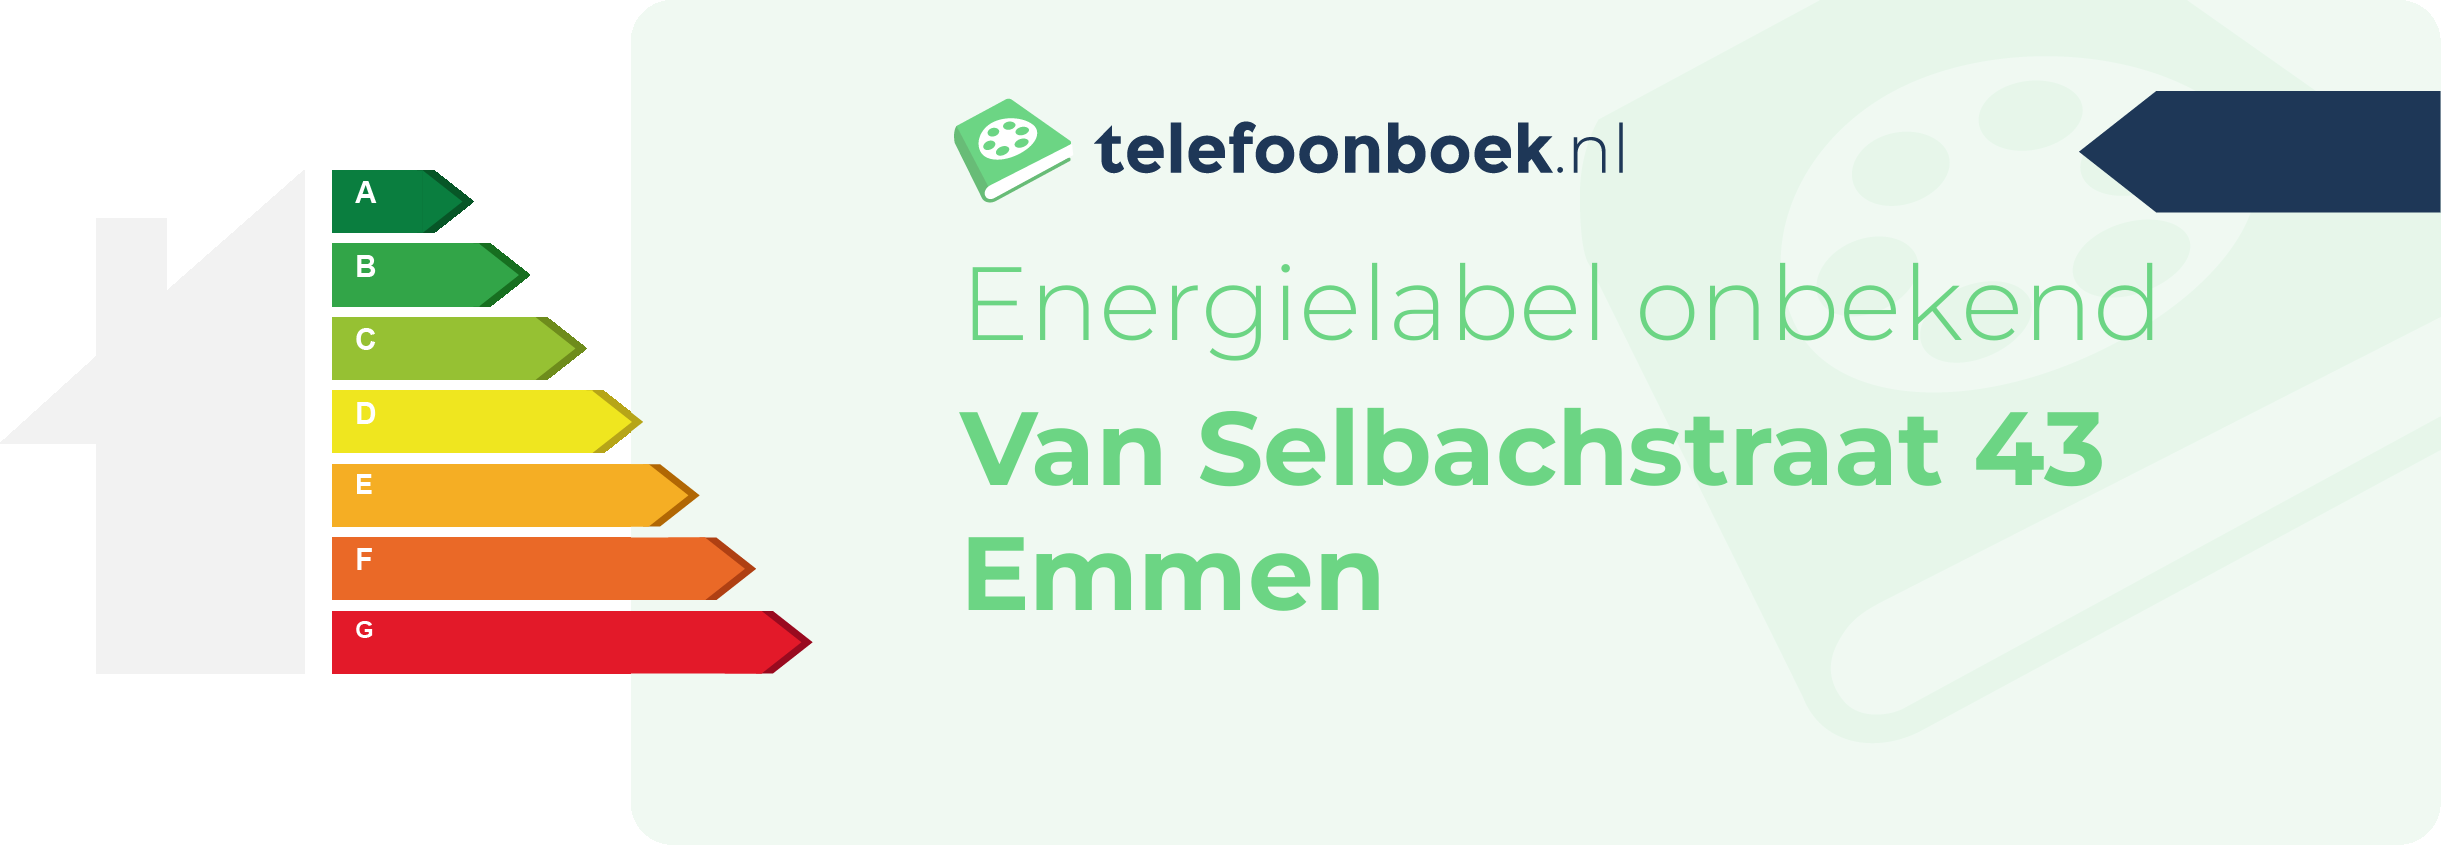 Energielabel Van Selbachstraat 43 Emmen